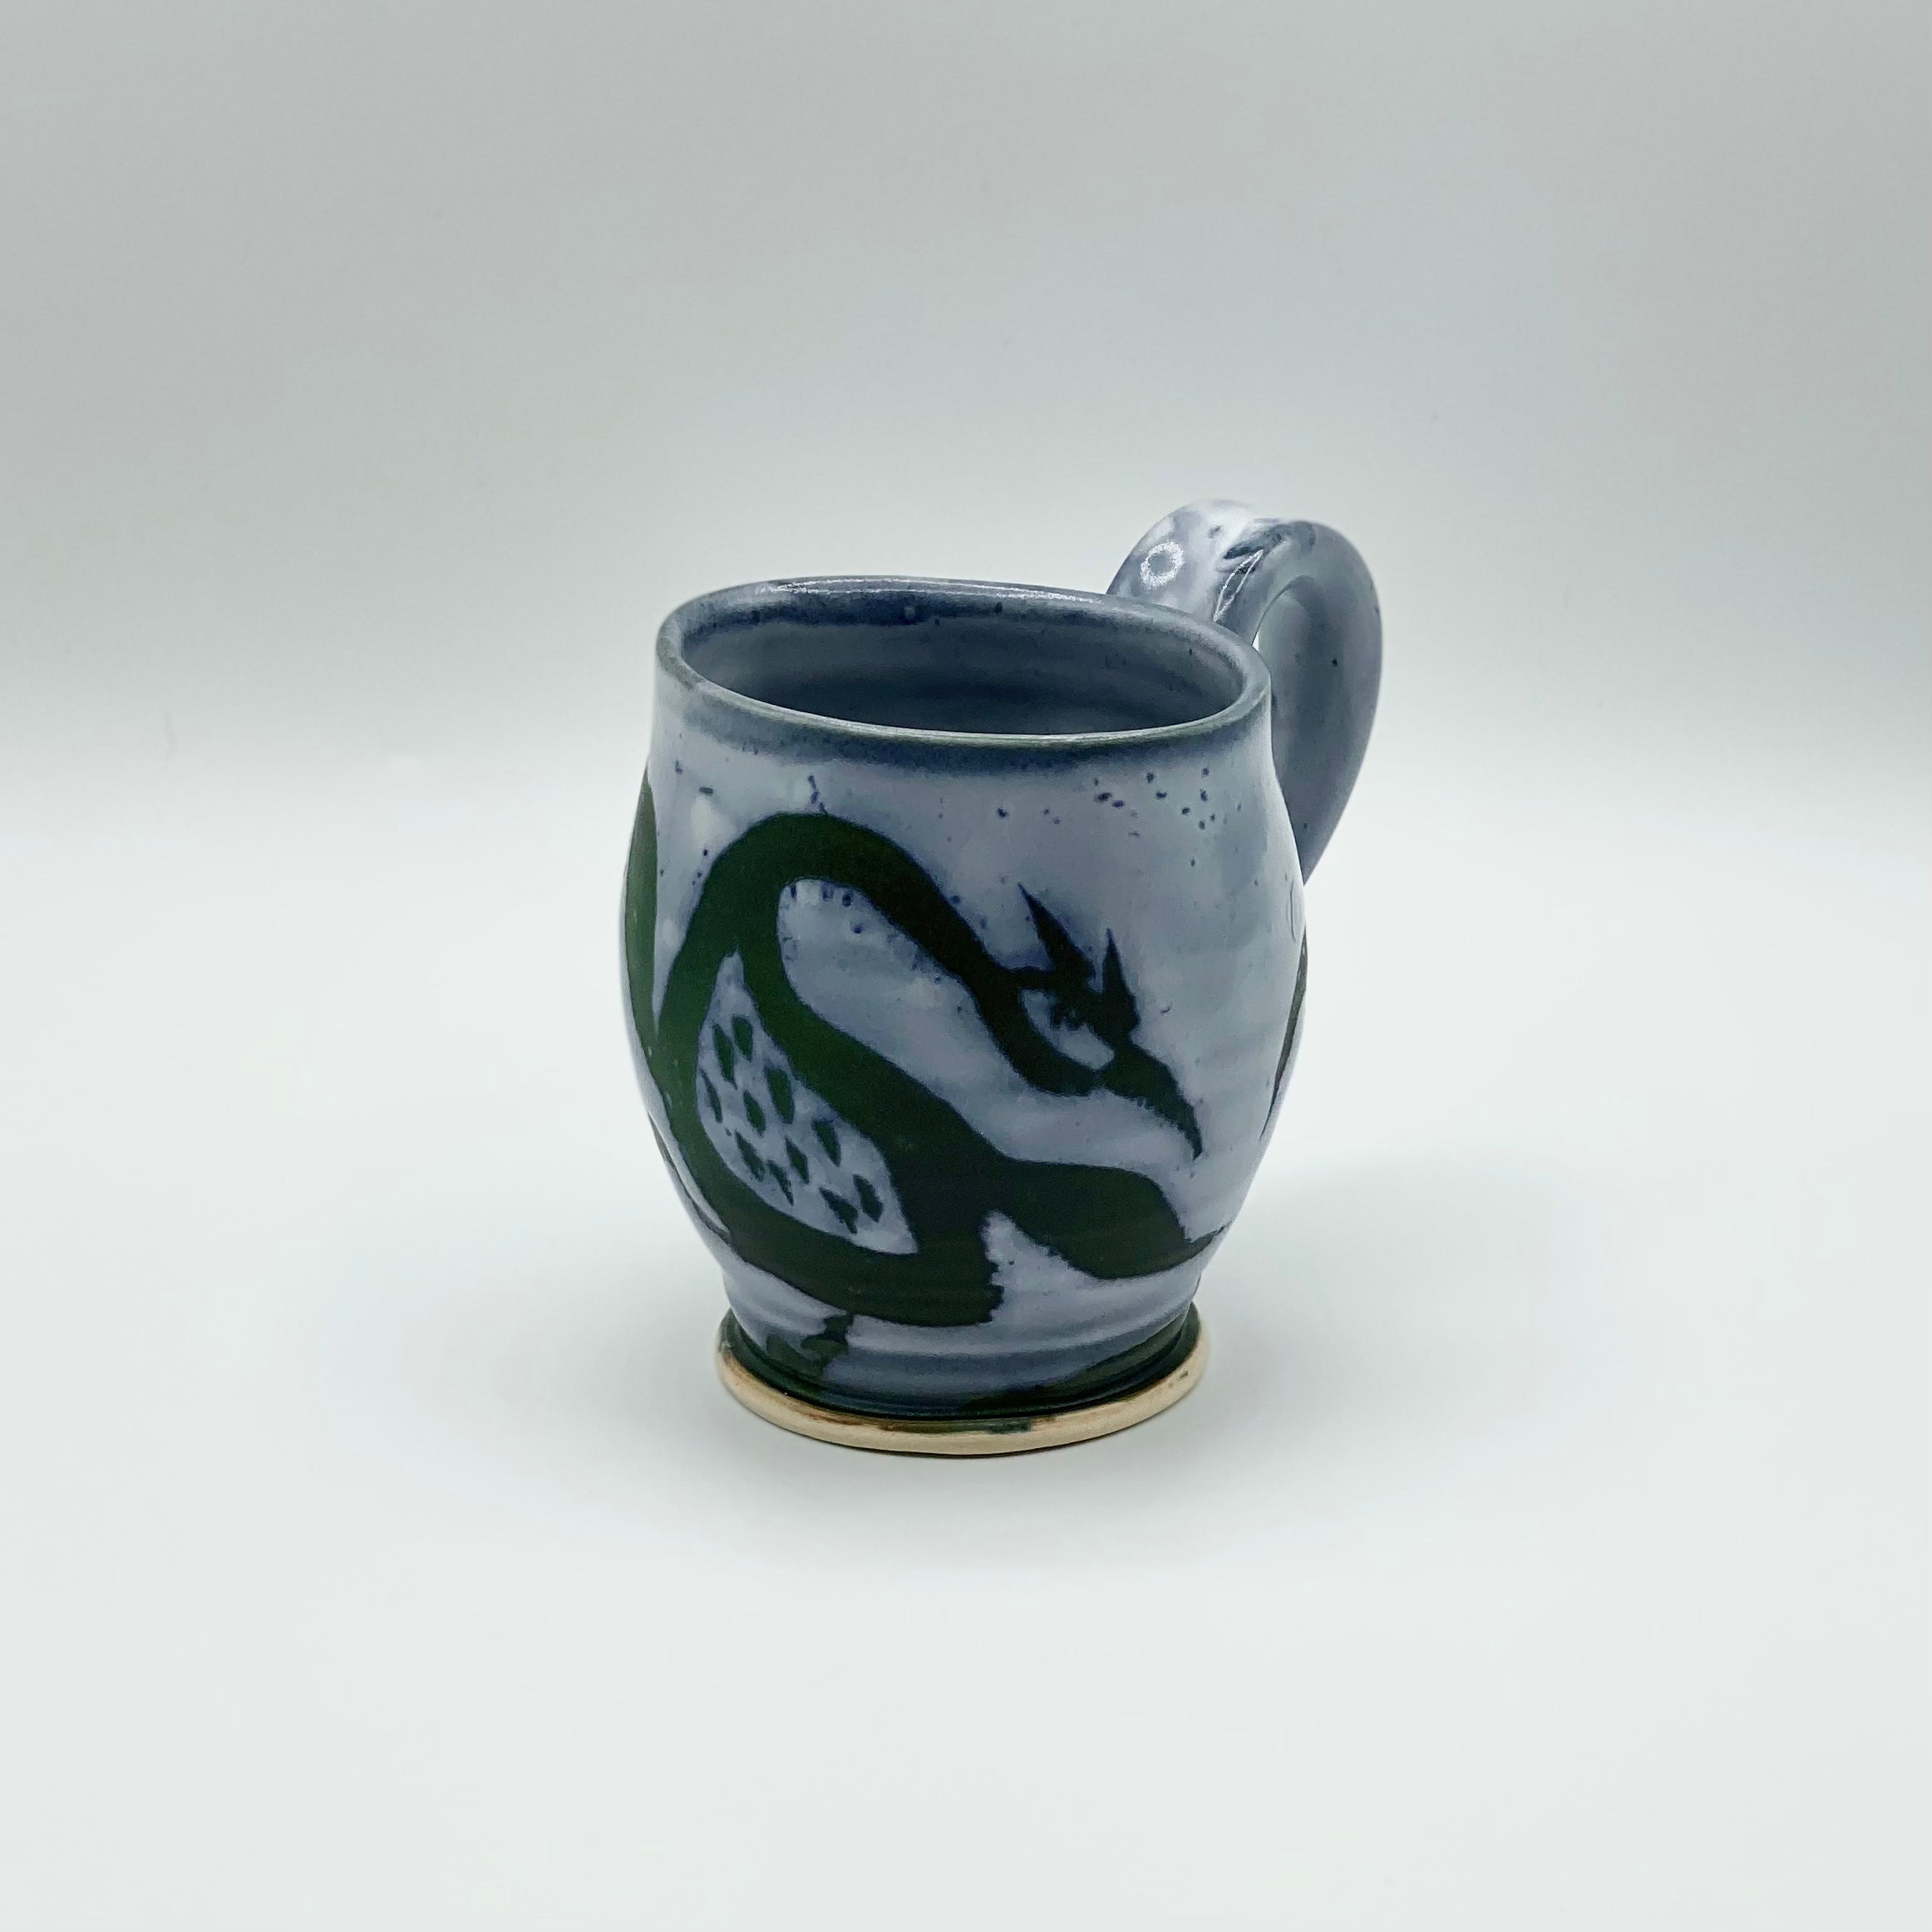 “Big Nose” Mug by Juggler’s Cove Pottery